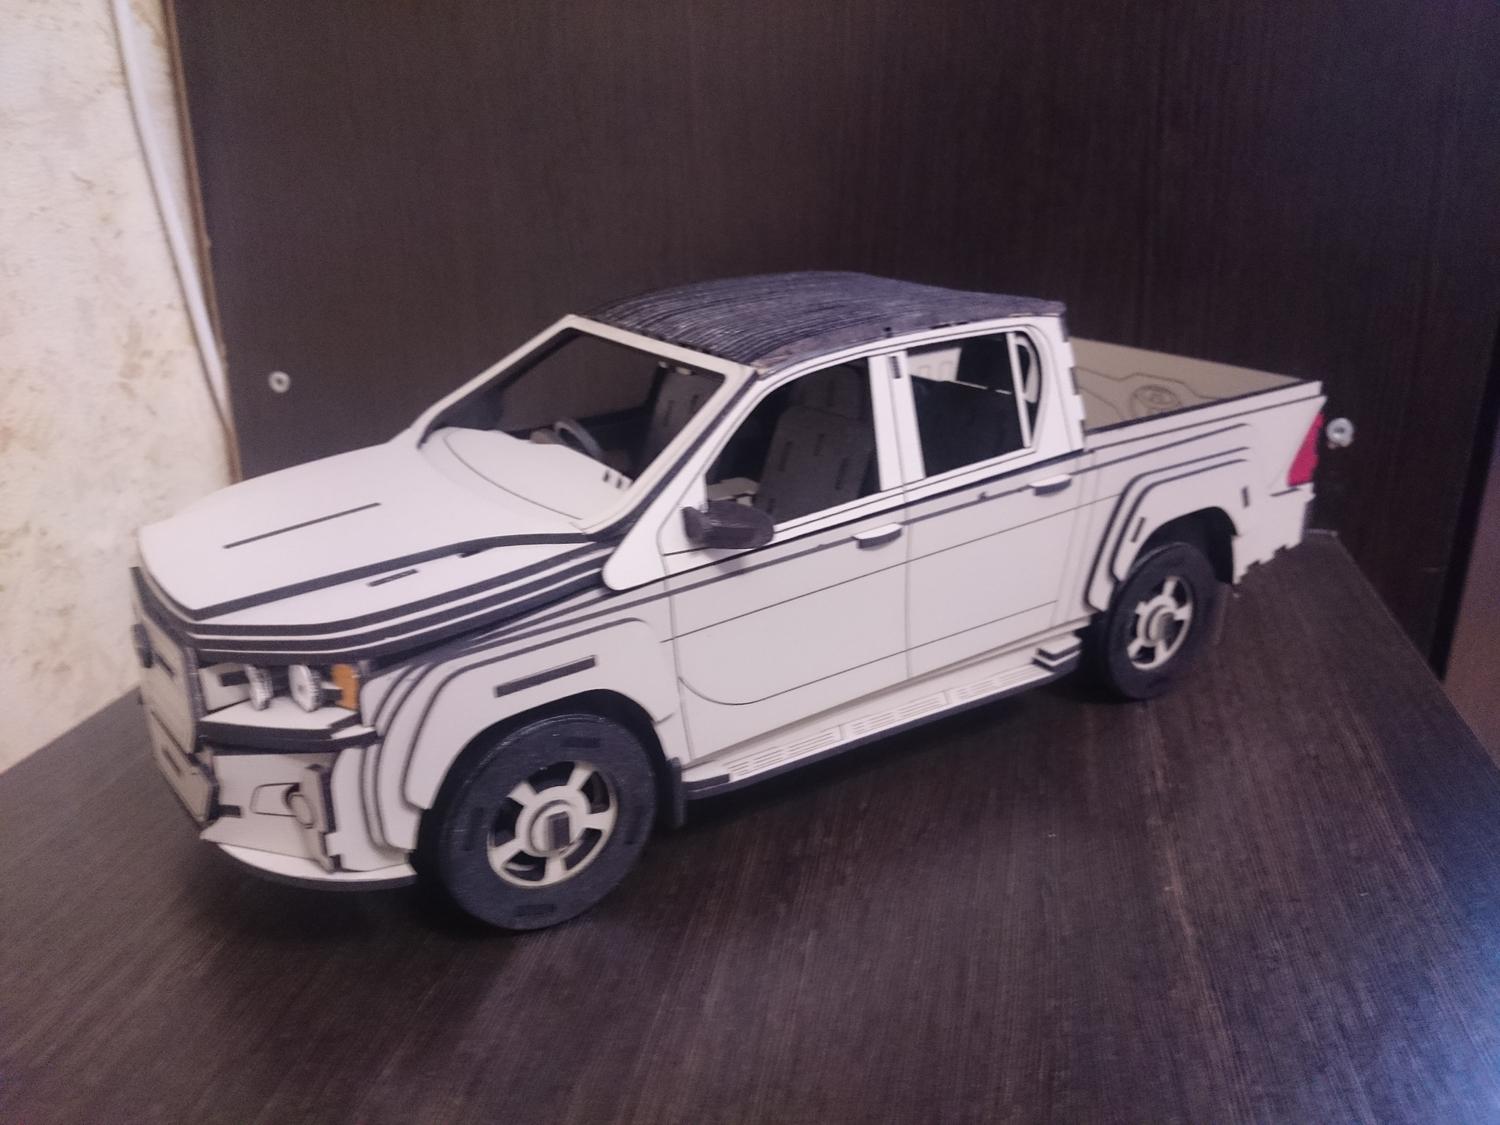 激光切割 Toyota Hilux 3D 切割 Hdf 2 5mm